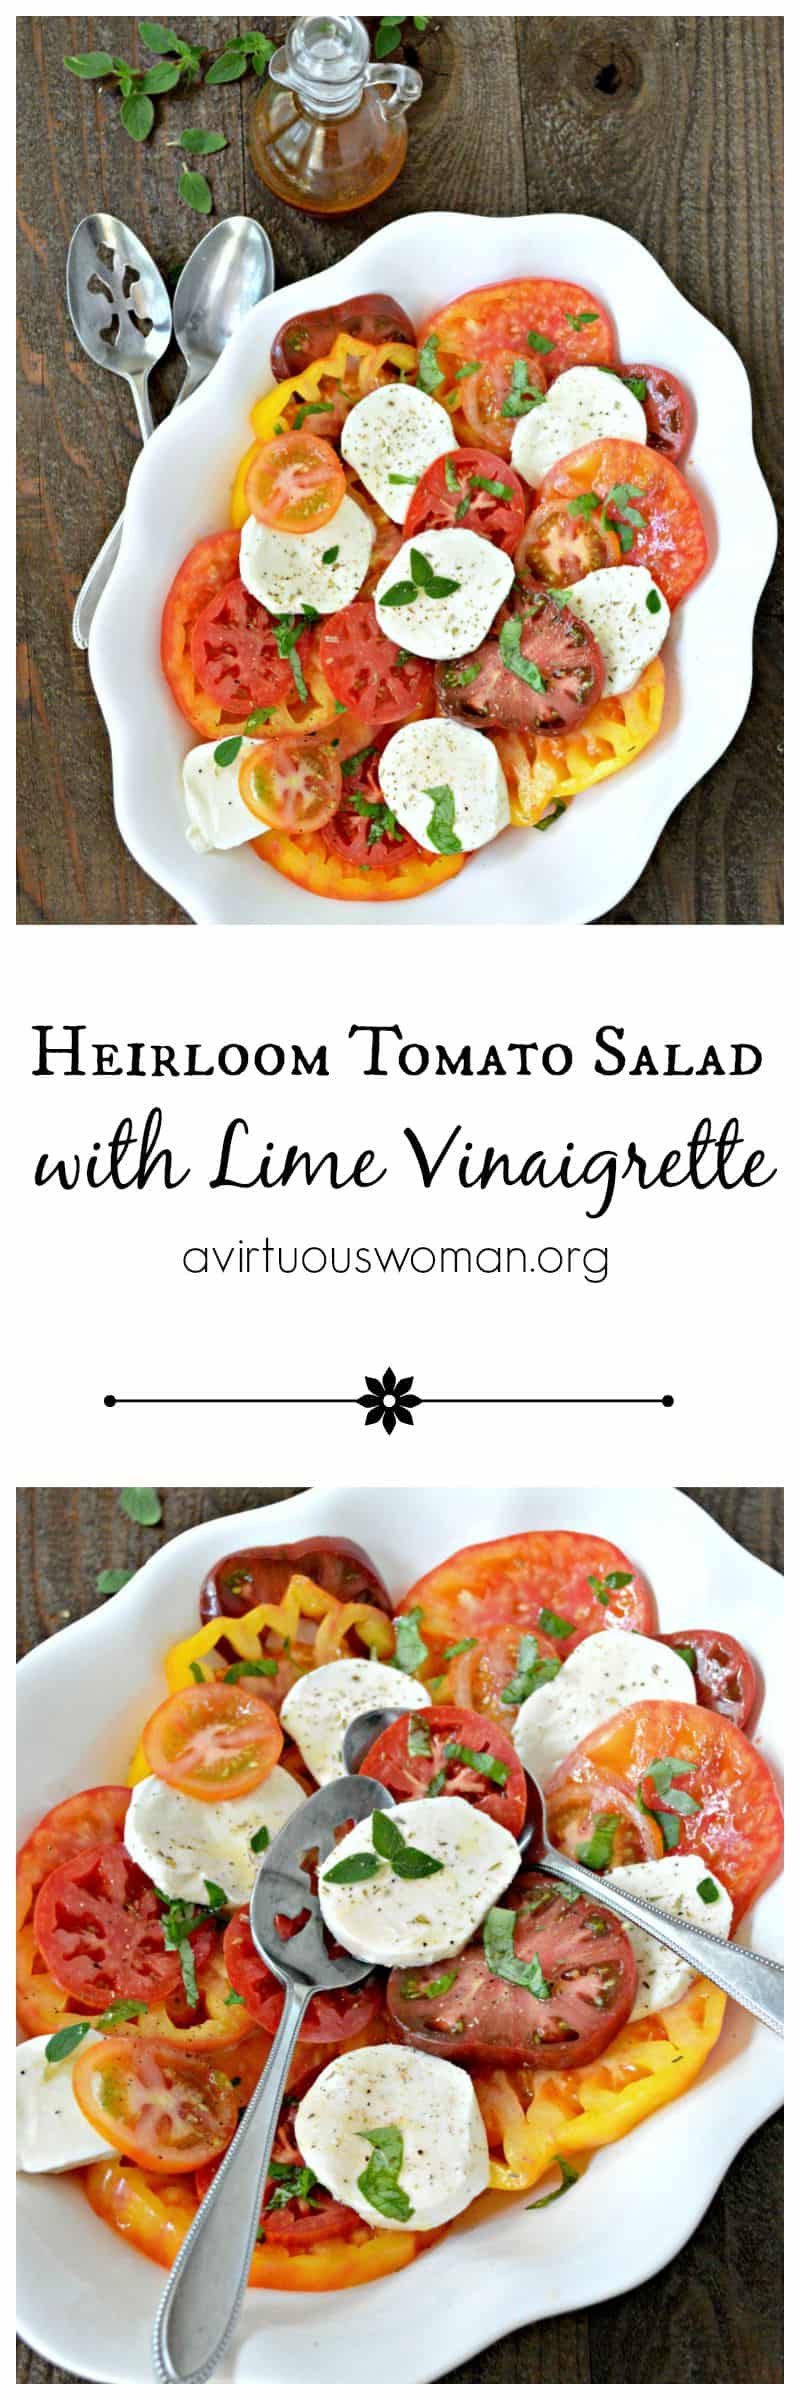 Heirloom Tomato Salad with Lime Vinaigrette @ AVirtuousWoman.org